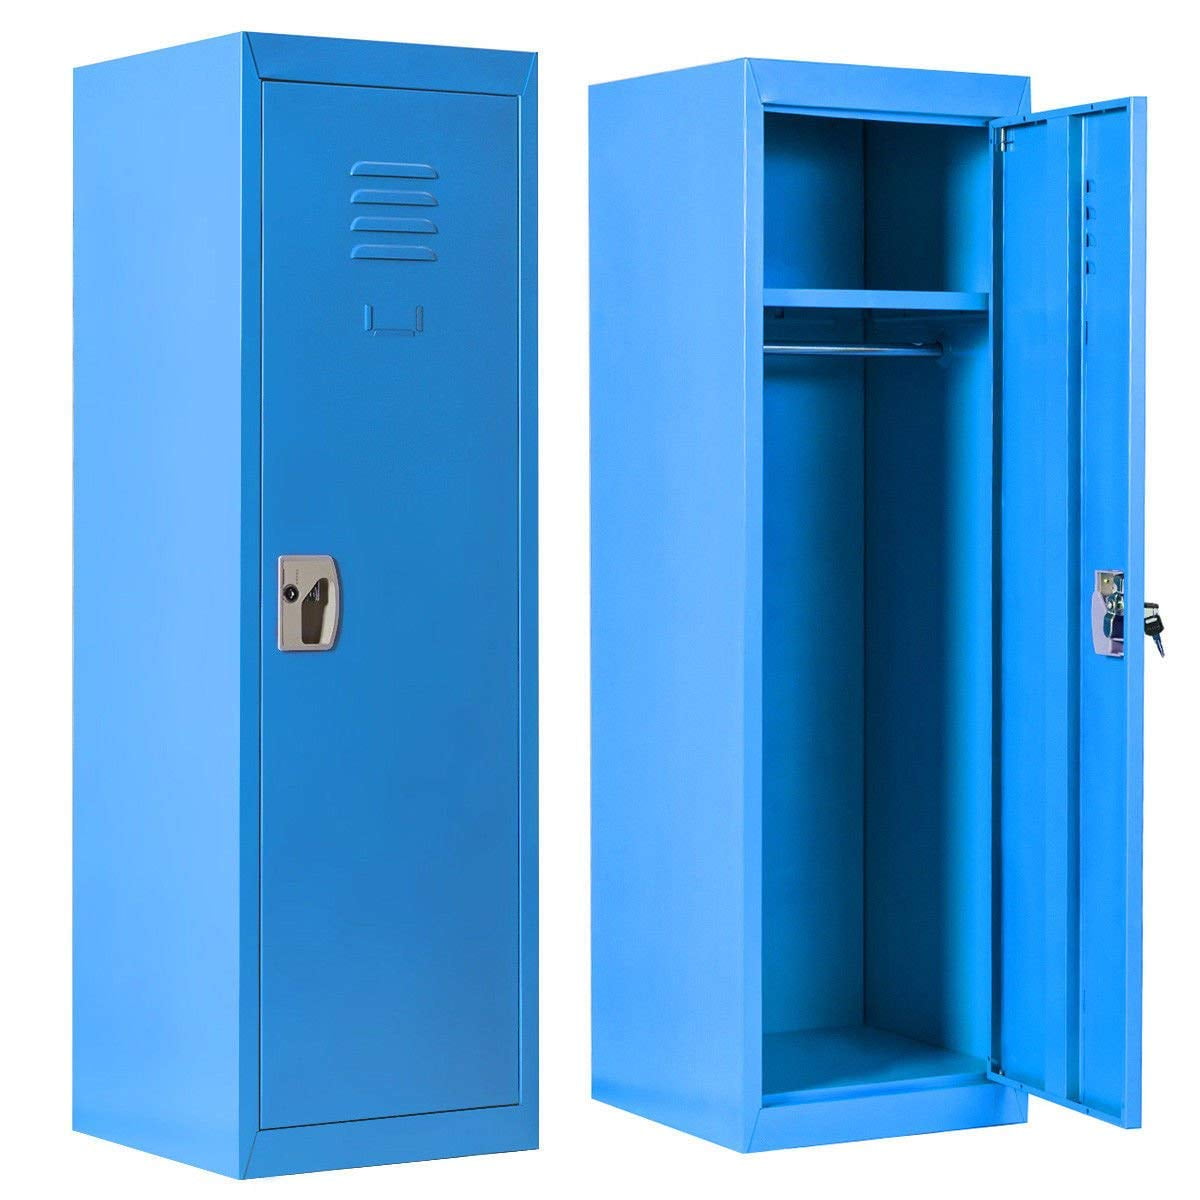 Locker for Kids Metal Locker for Bedroom,Kids Room,Steel Storage